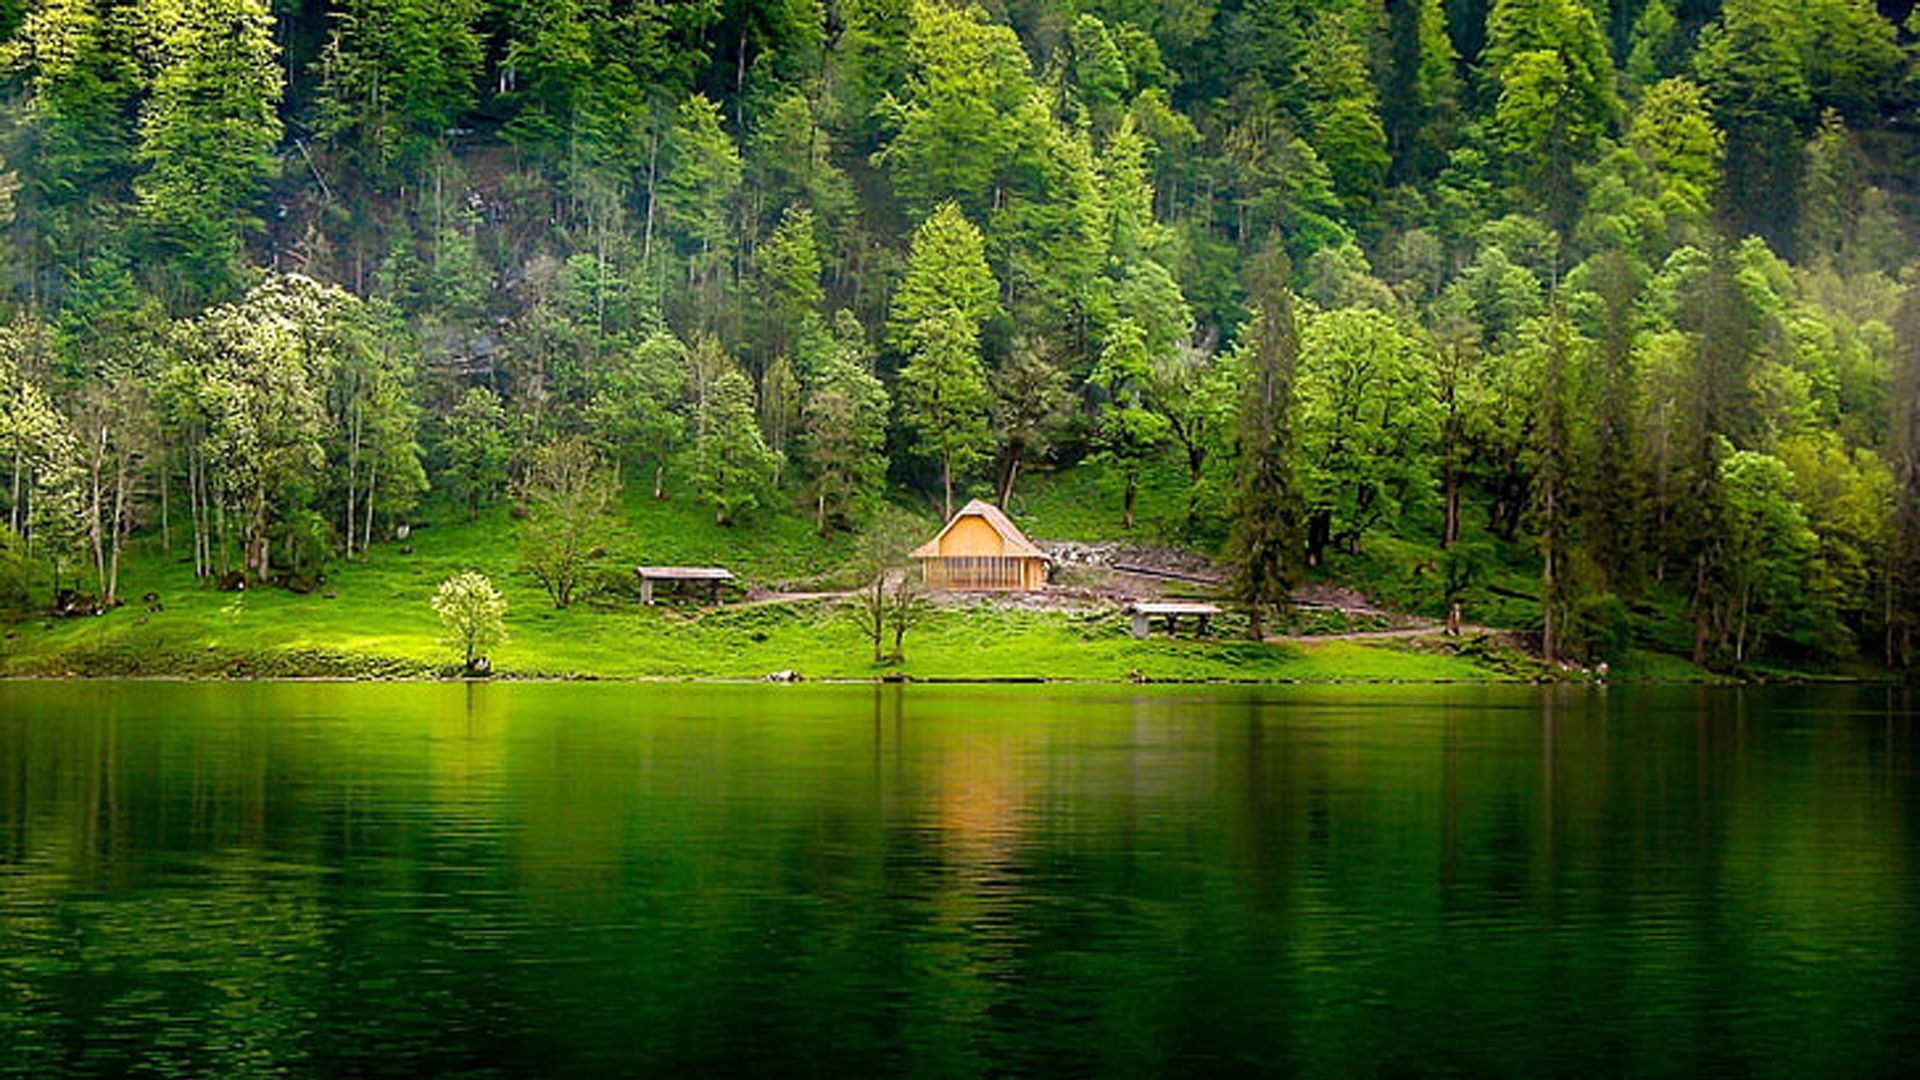 A small house sits on a grassy hill near a lake. - Lake